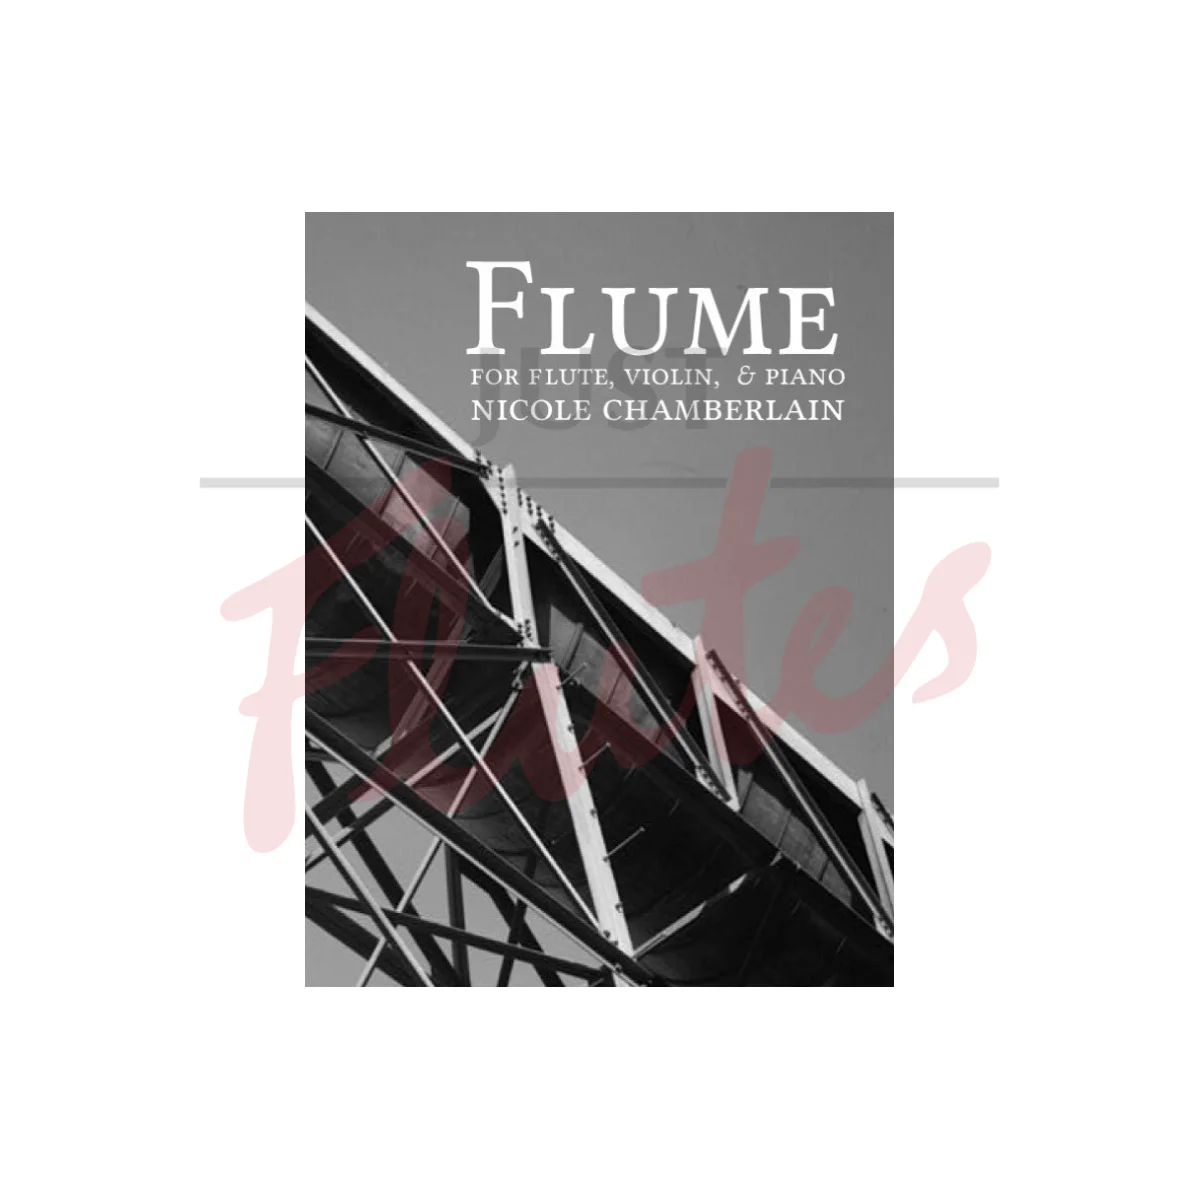 Flume for Flute, Violin and Piano